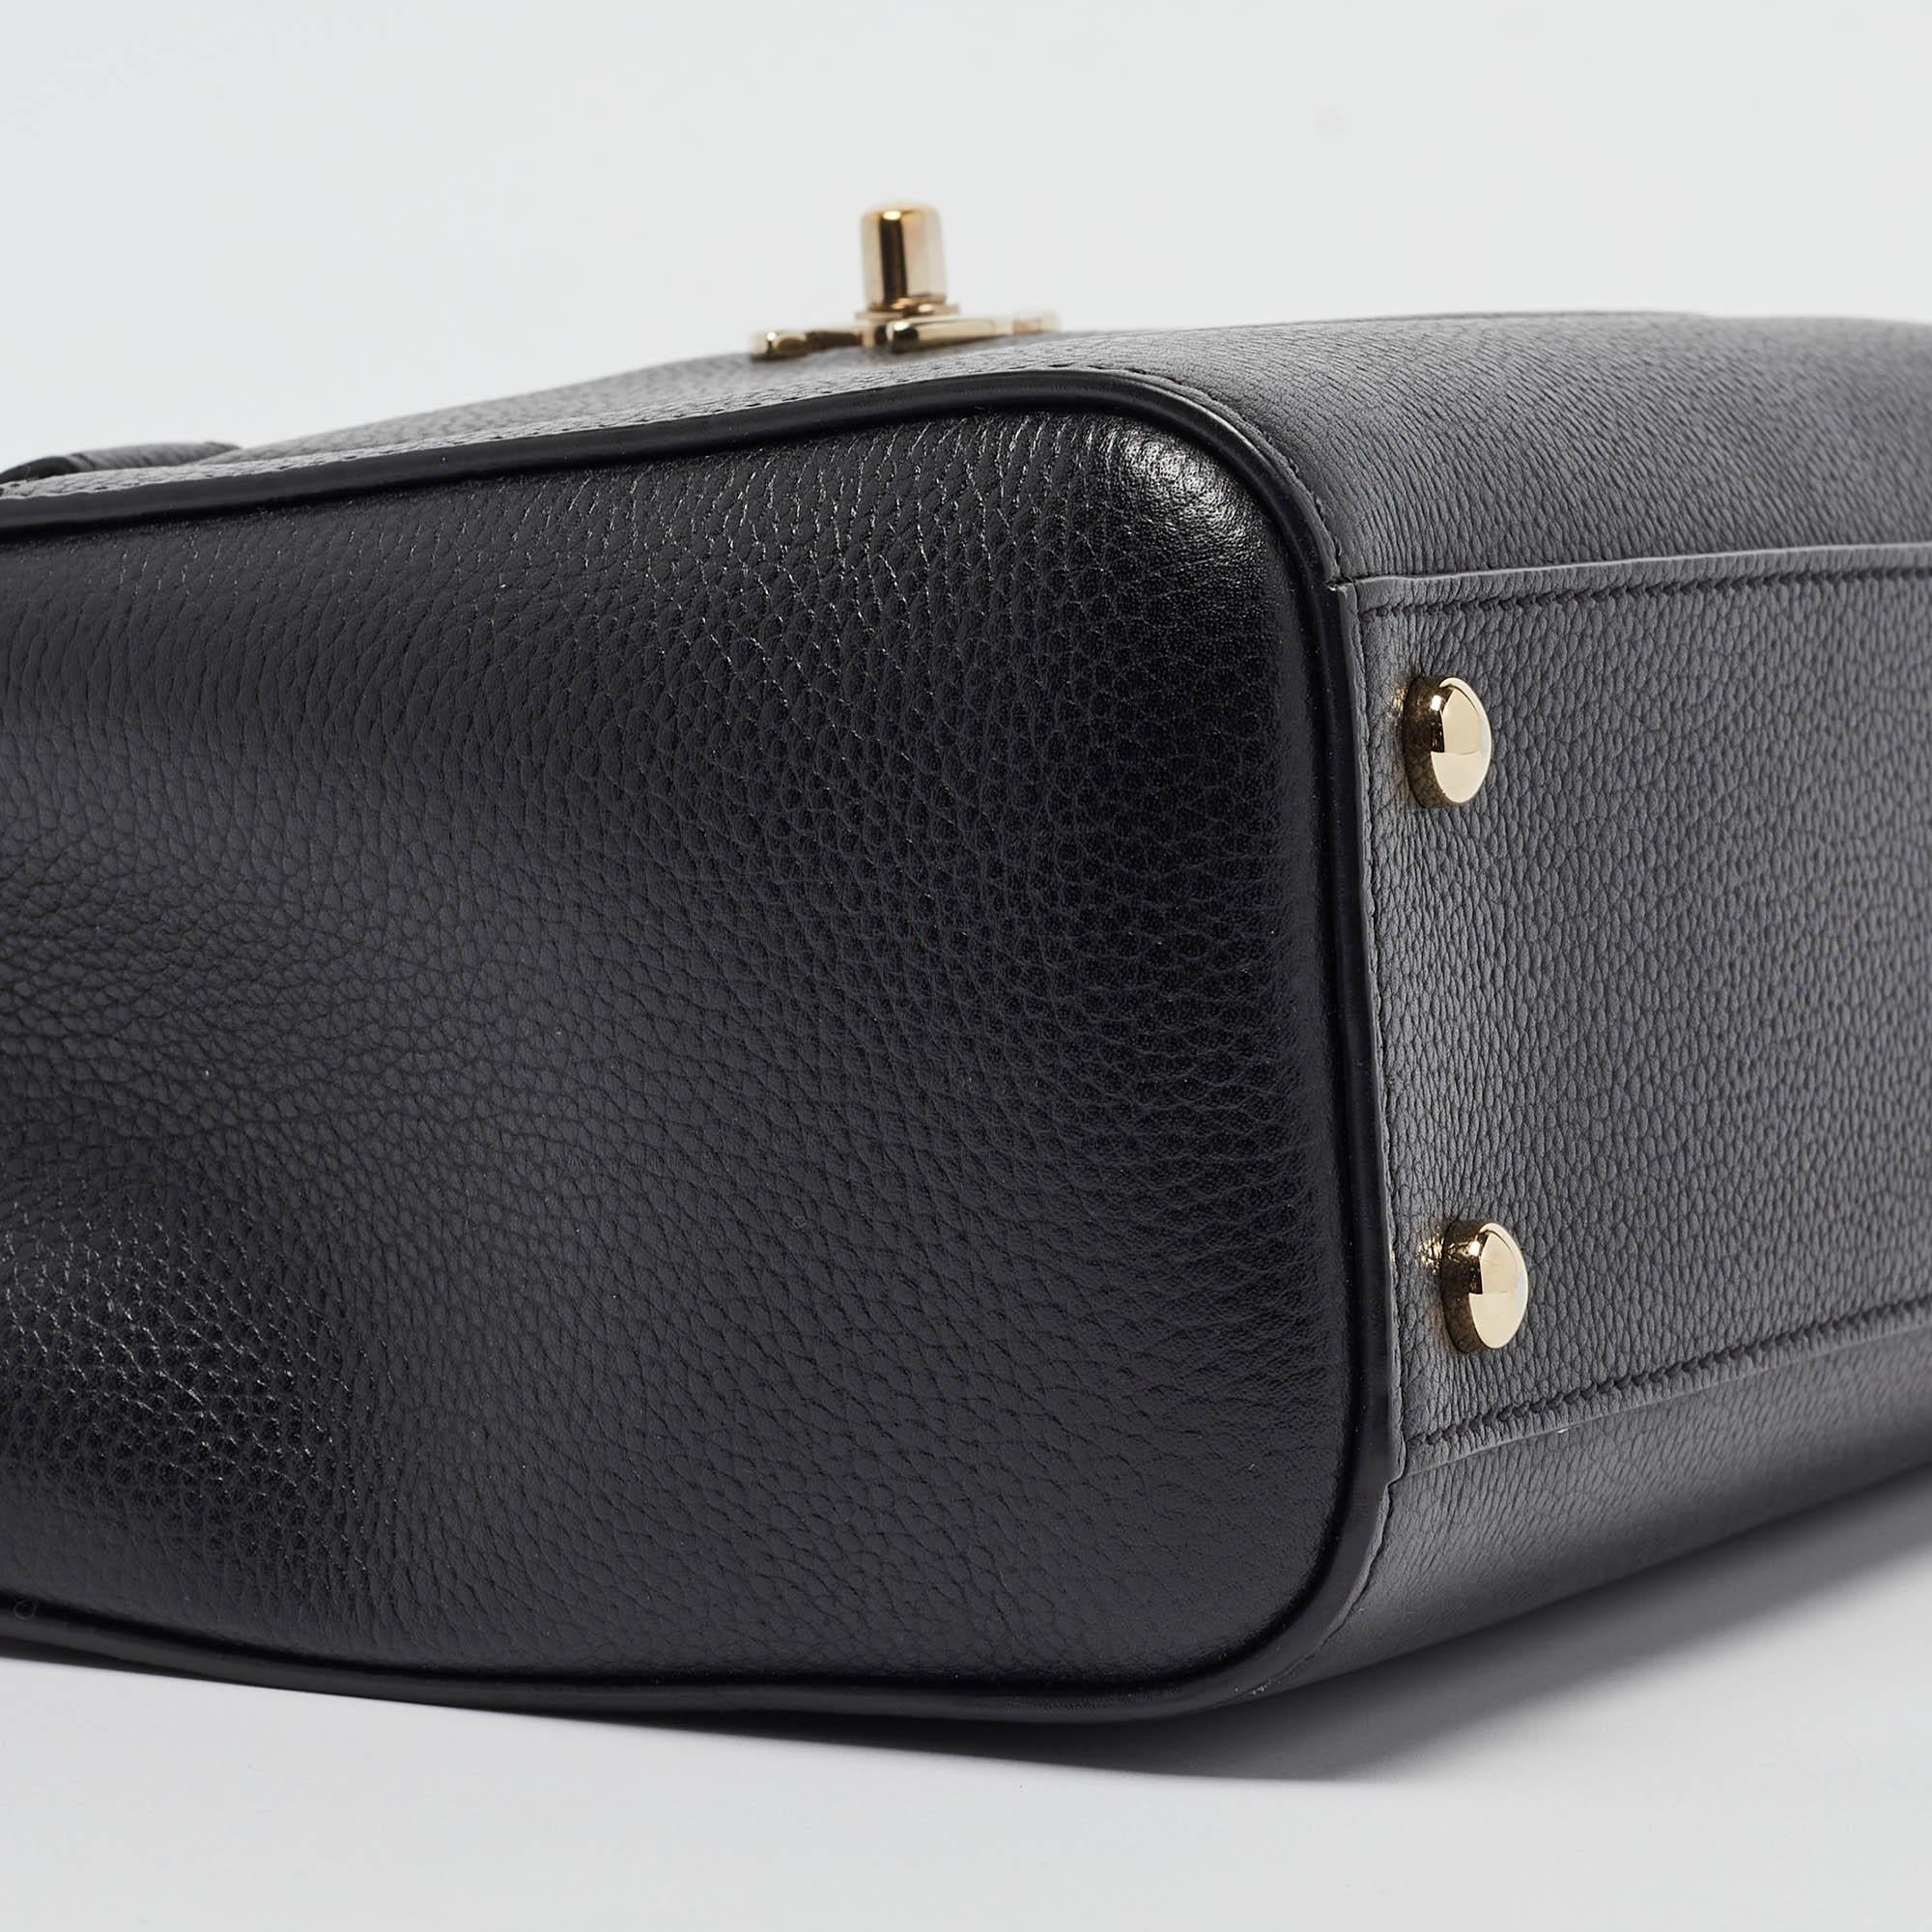 Chanel Black Leather Mini Neo Executive Tote For Sale 6